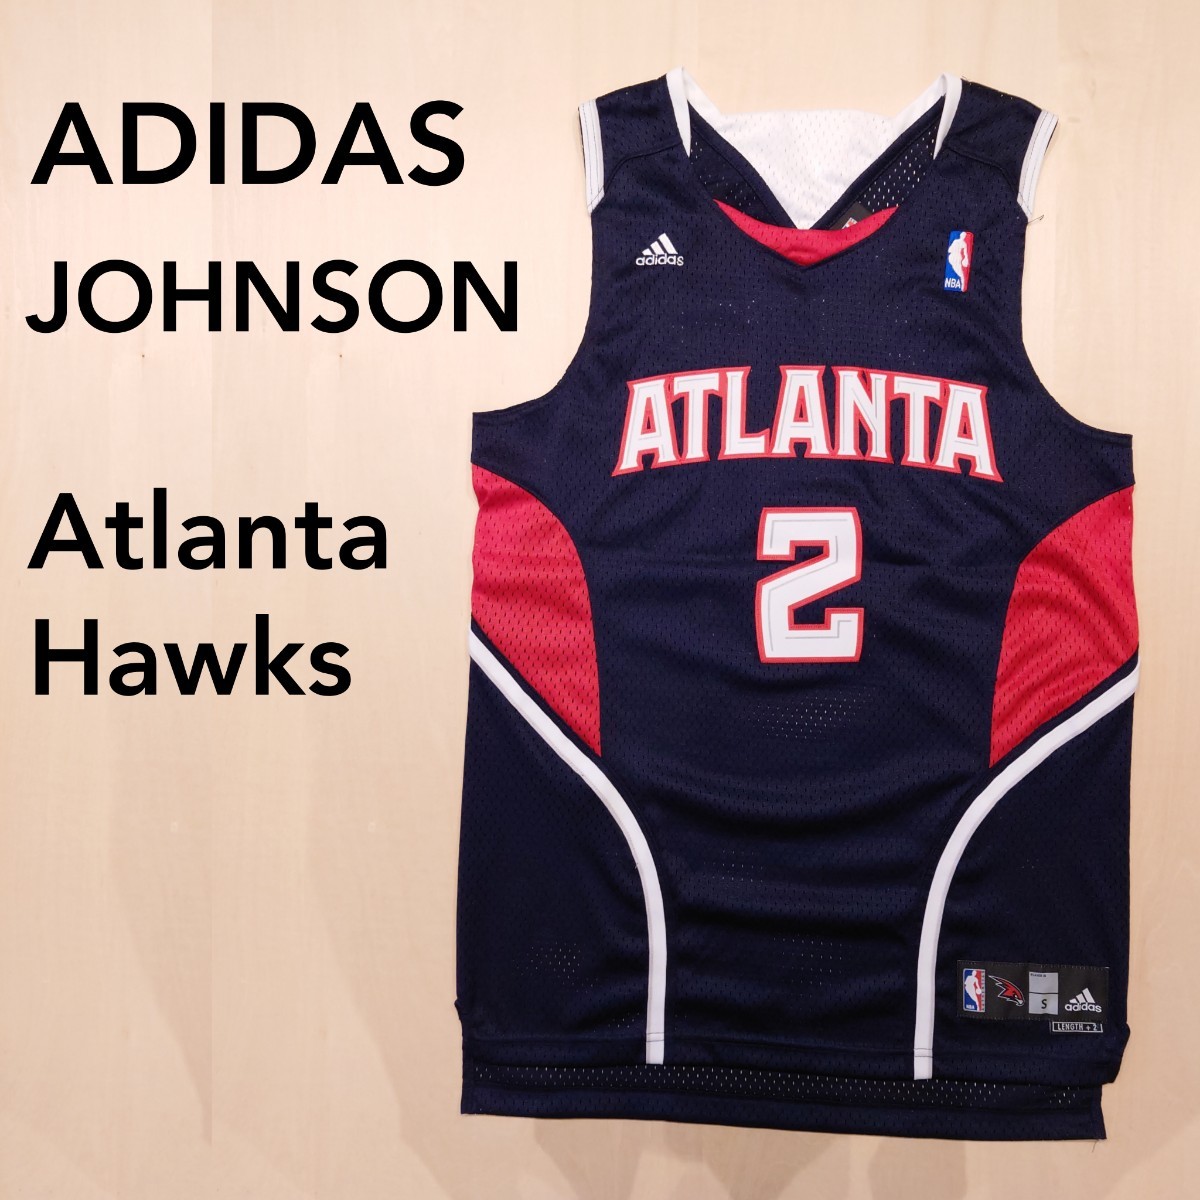 Adidas NBA Баскетбольная форма Атланта Хокс Атланта Хокс Джонсон №2 Adidas 2307